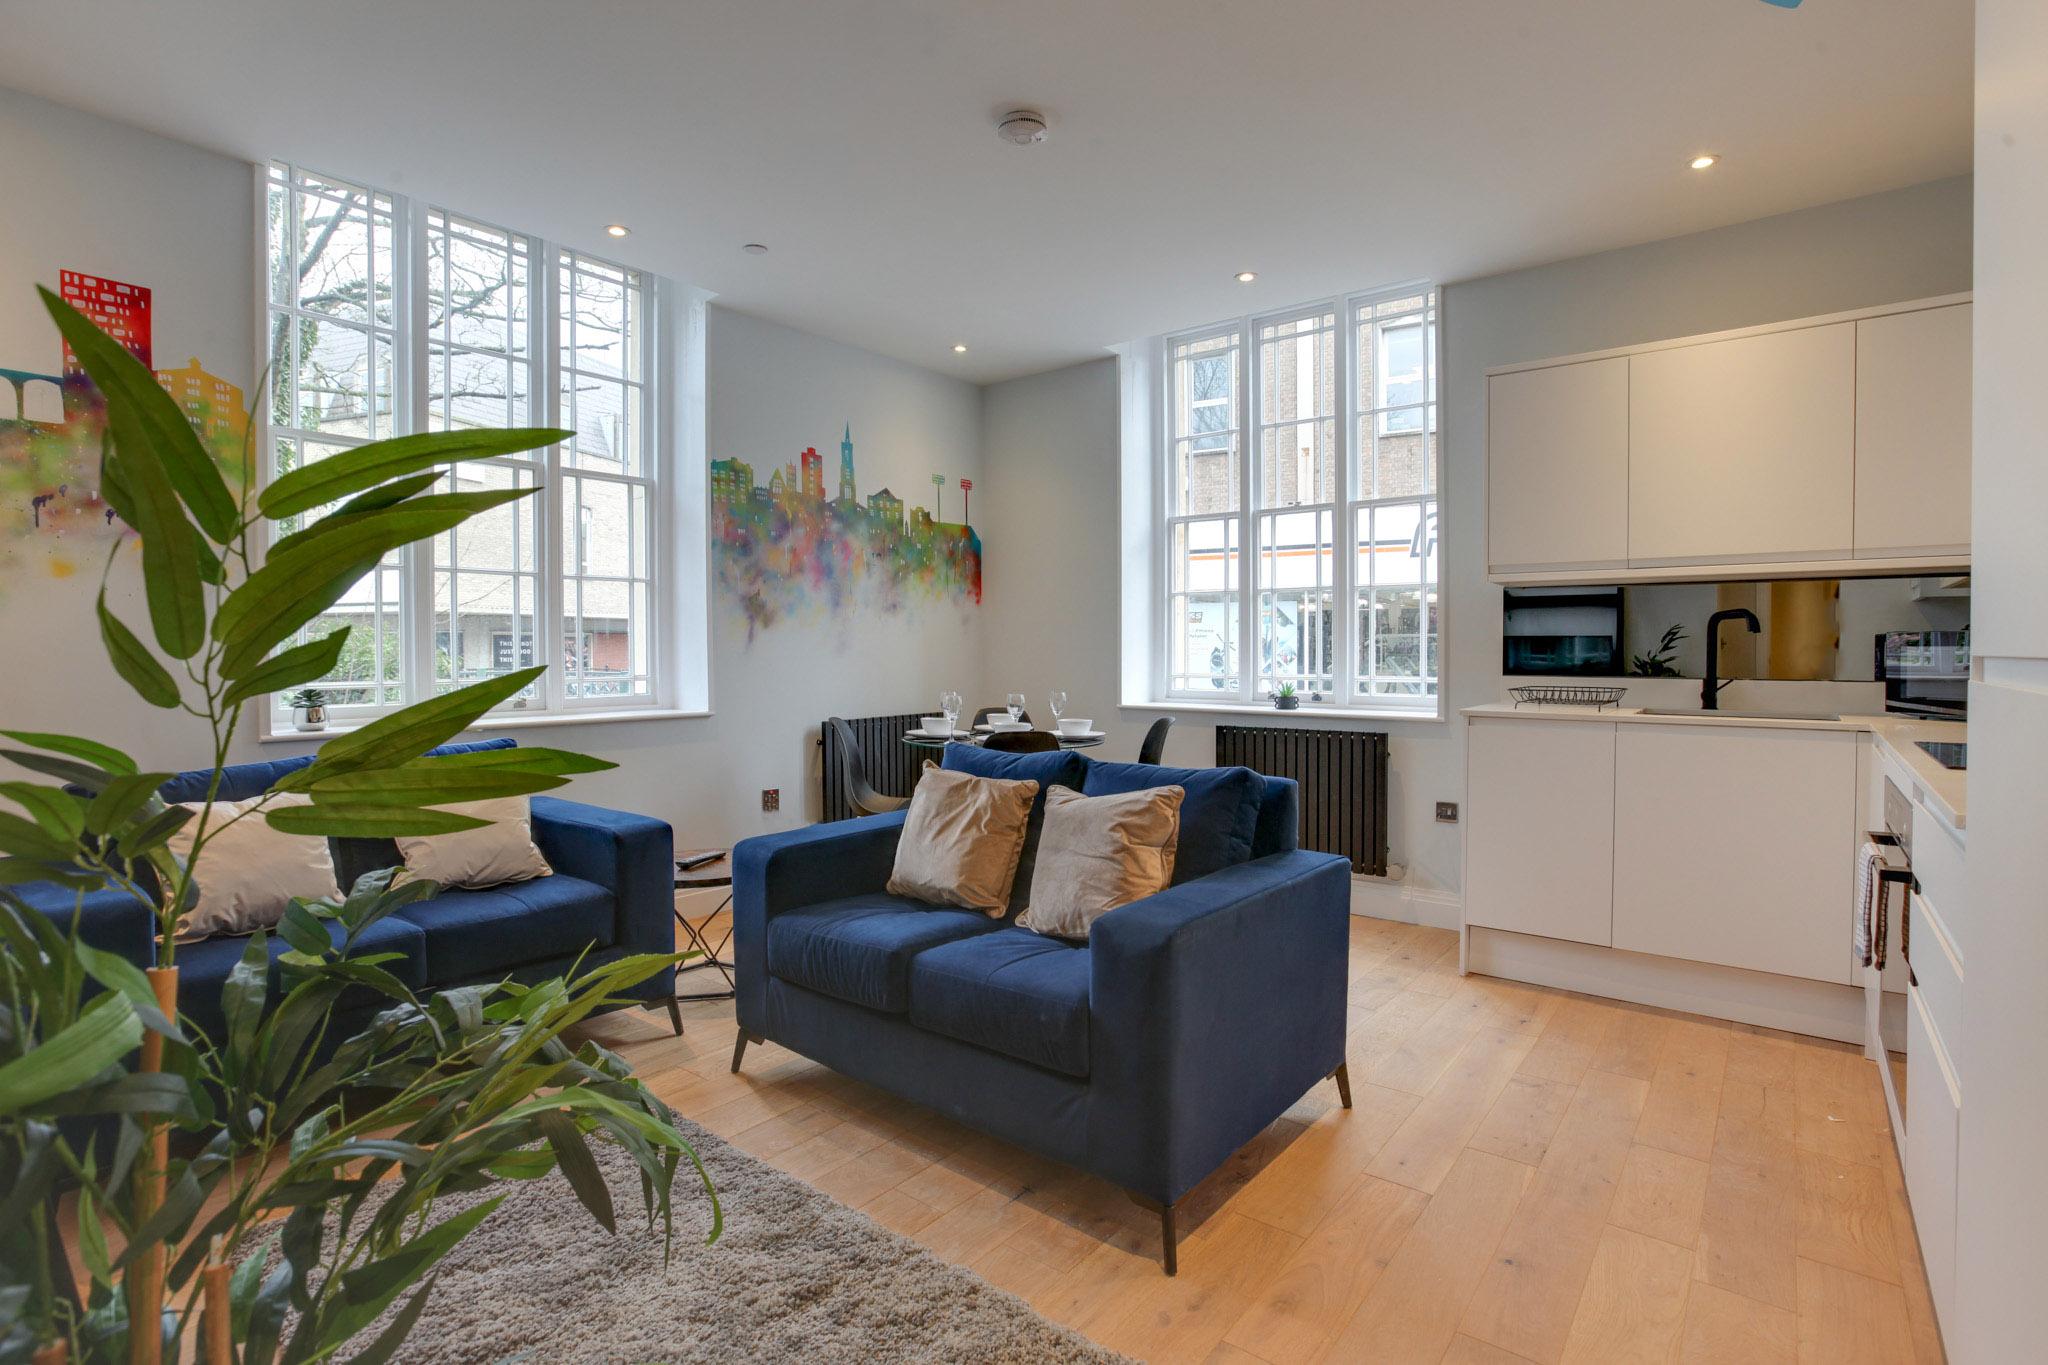 New London Life Executive Apartments1